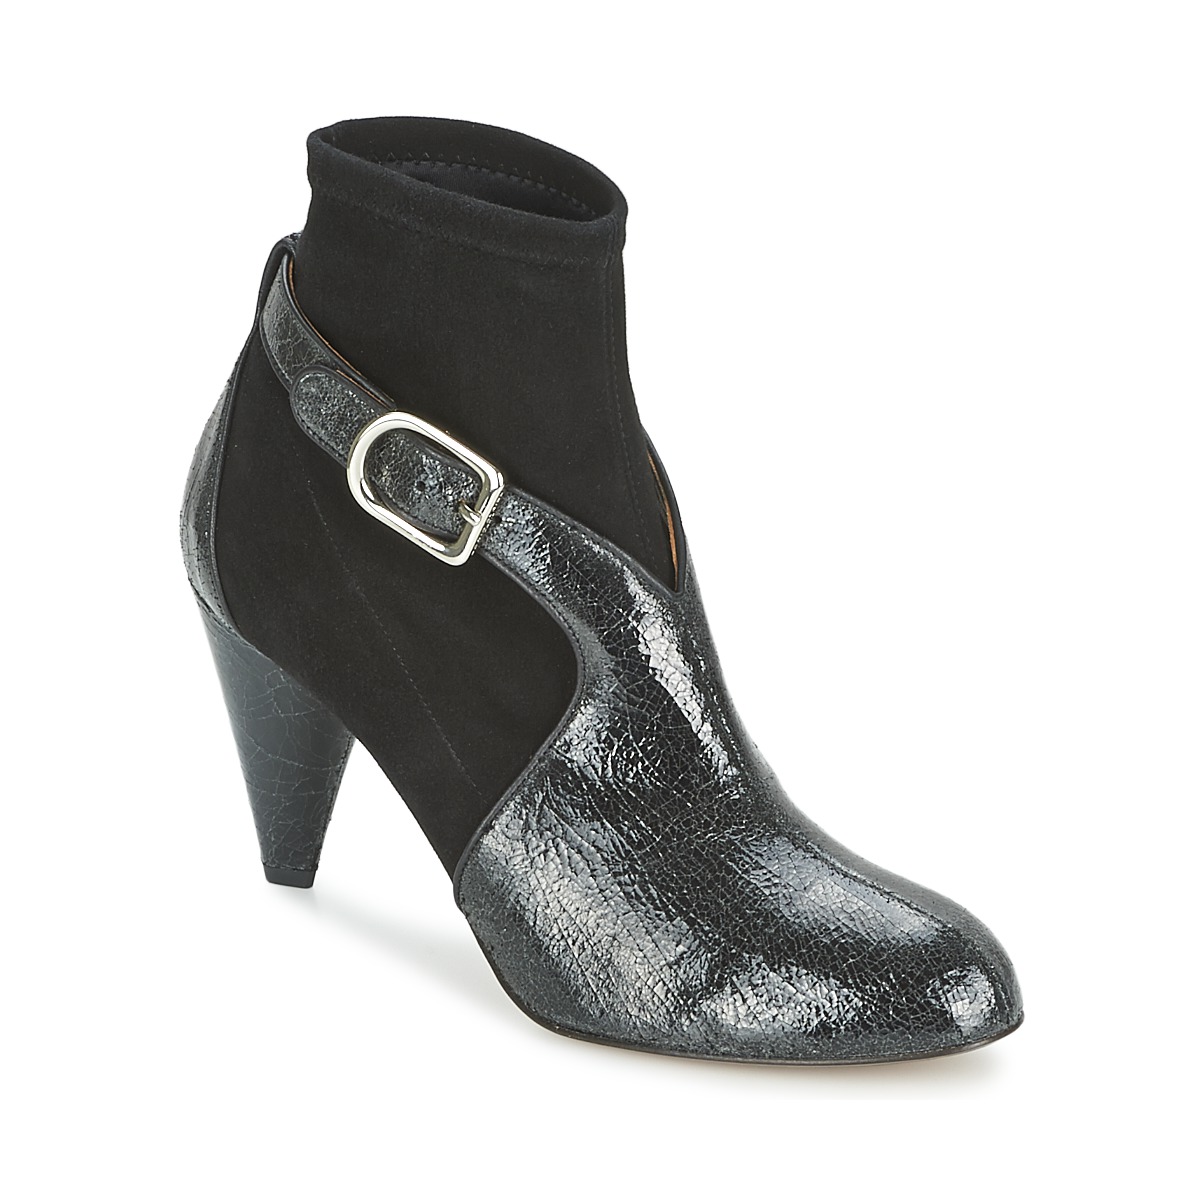 Chaussures Femme ankle boots rieker y0830 91 shwarz kombi 697859-B Noir